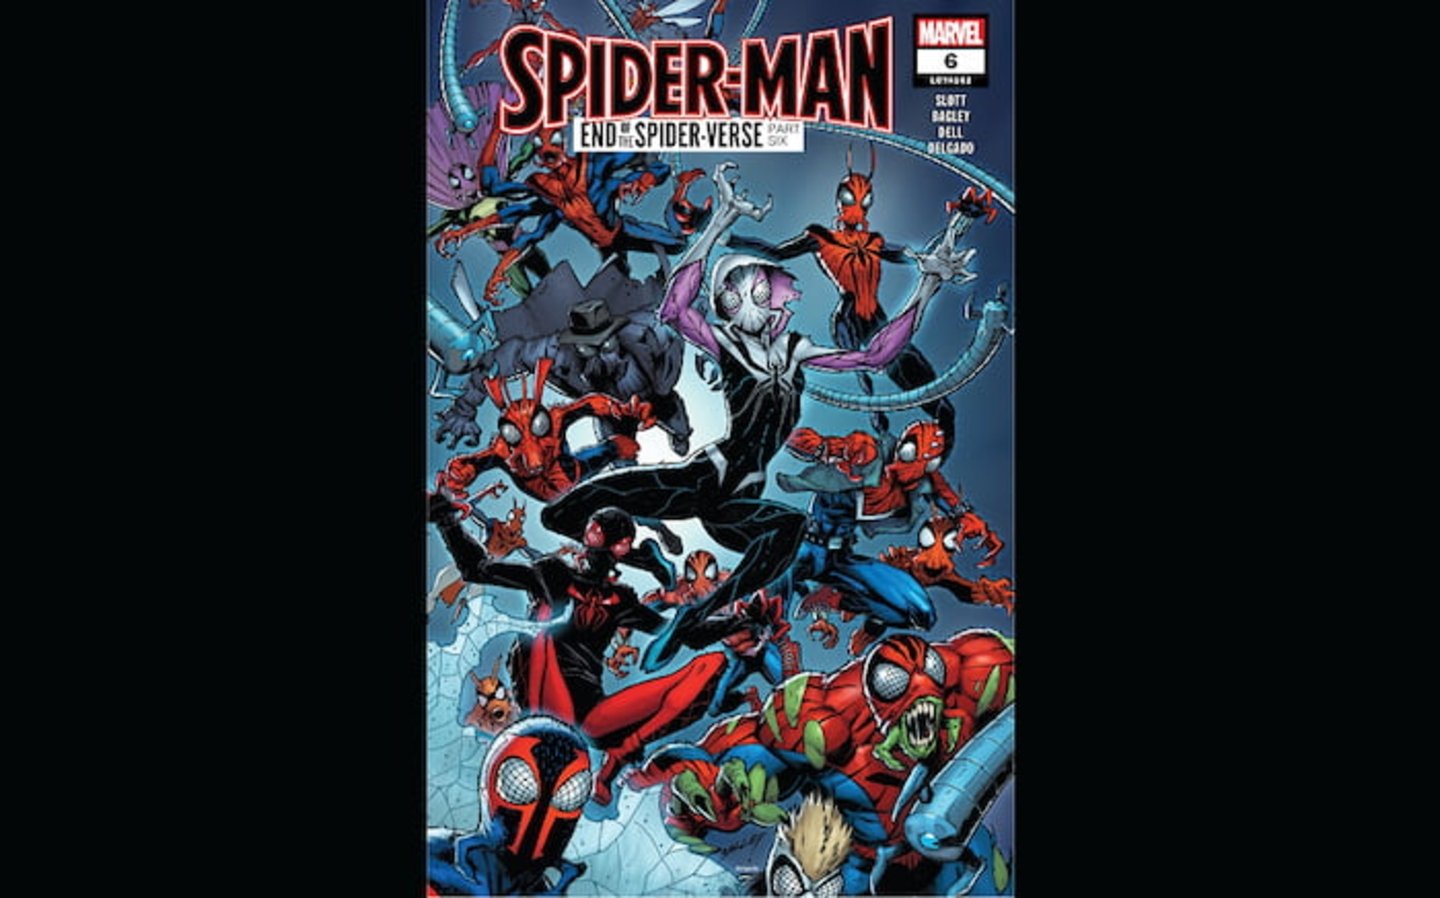 Portada del volumen #6 del cómic Spider-Man, de Marvel